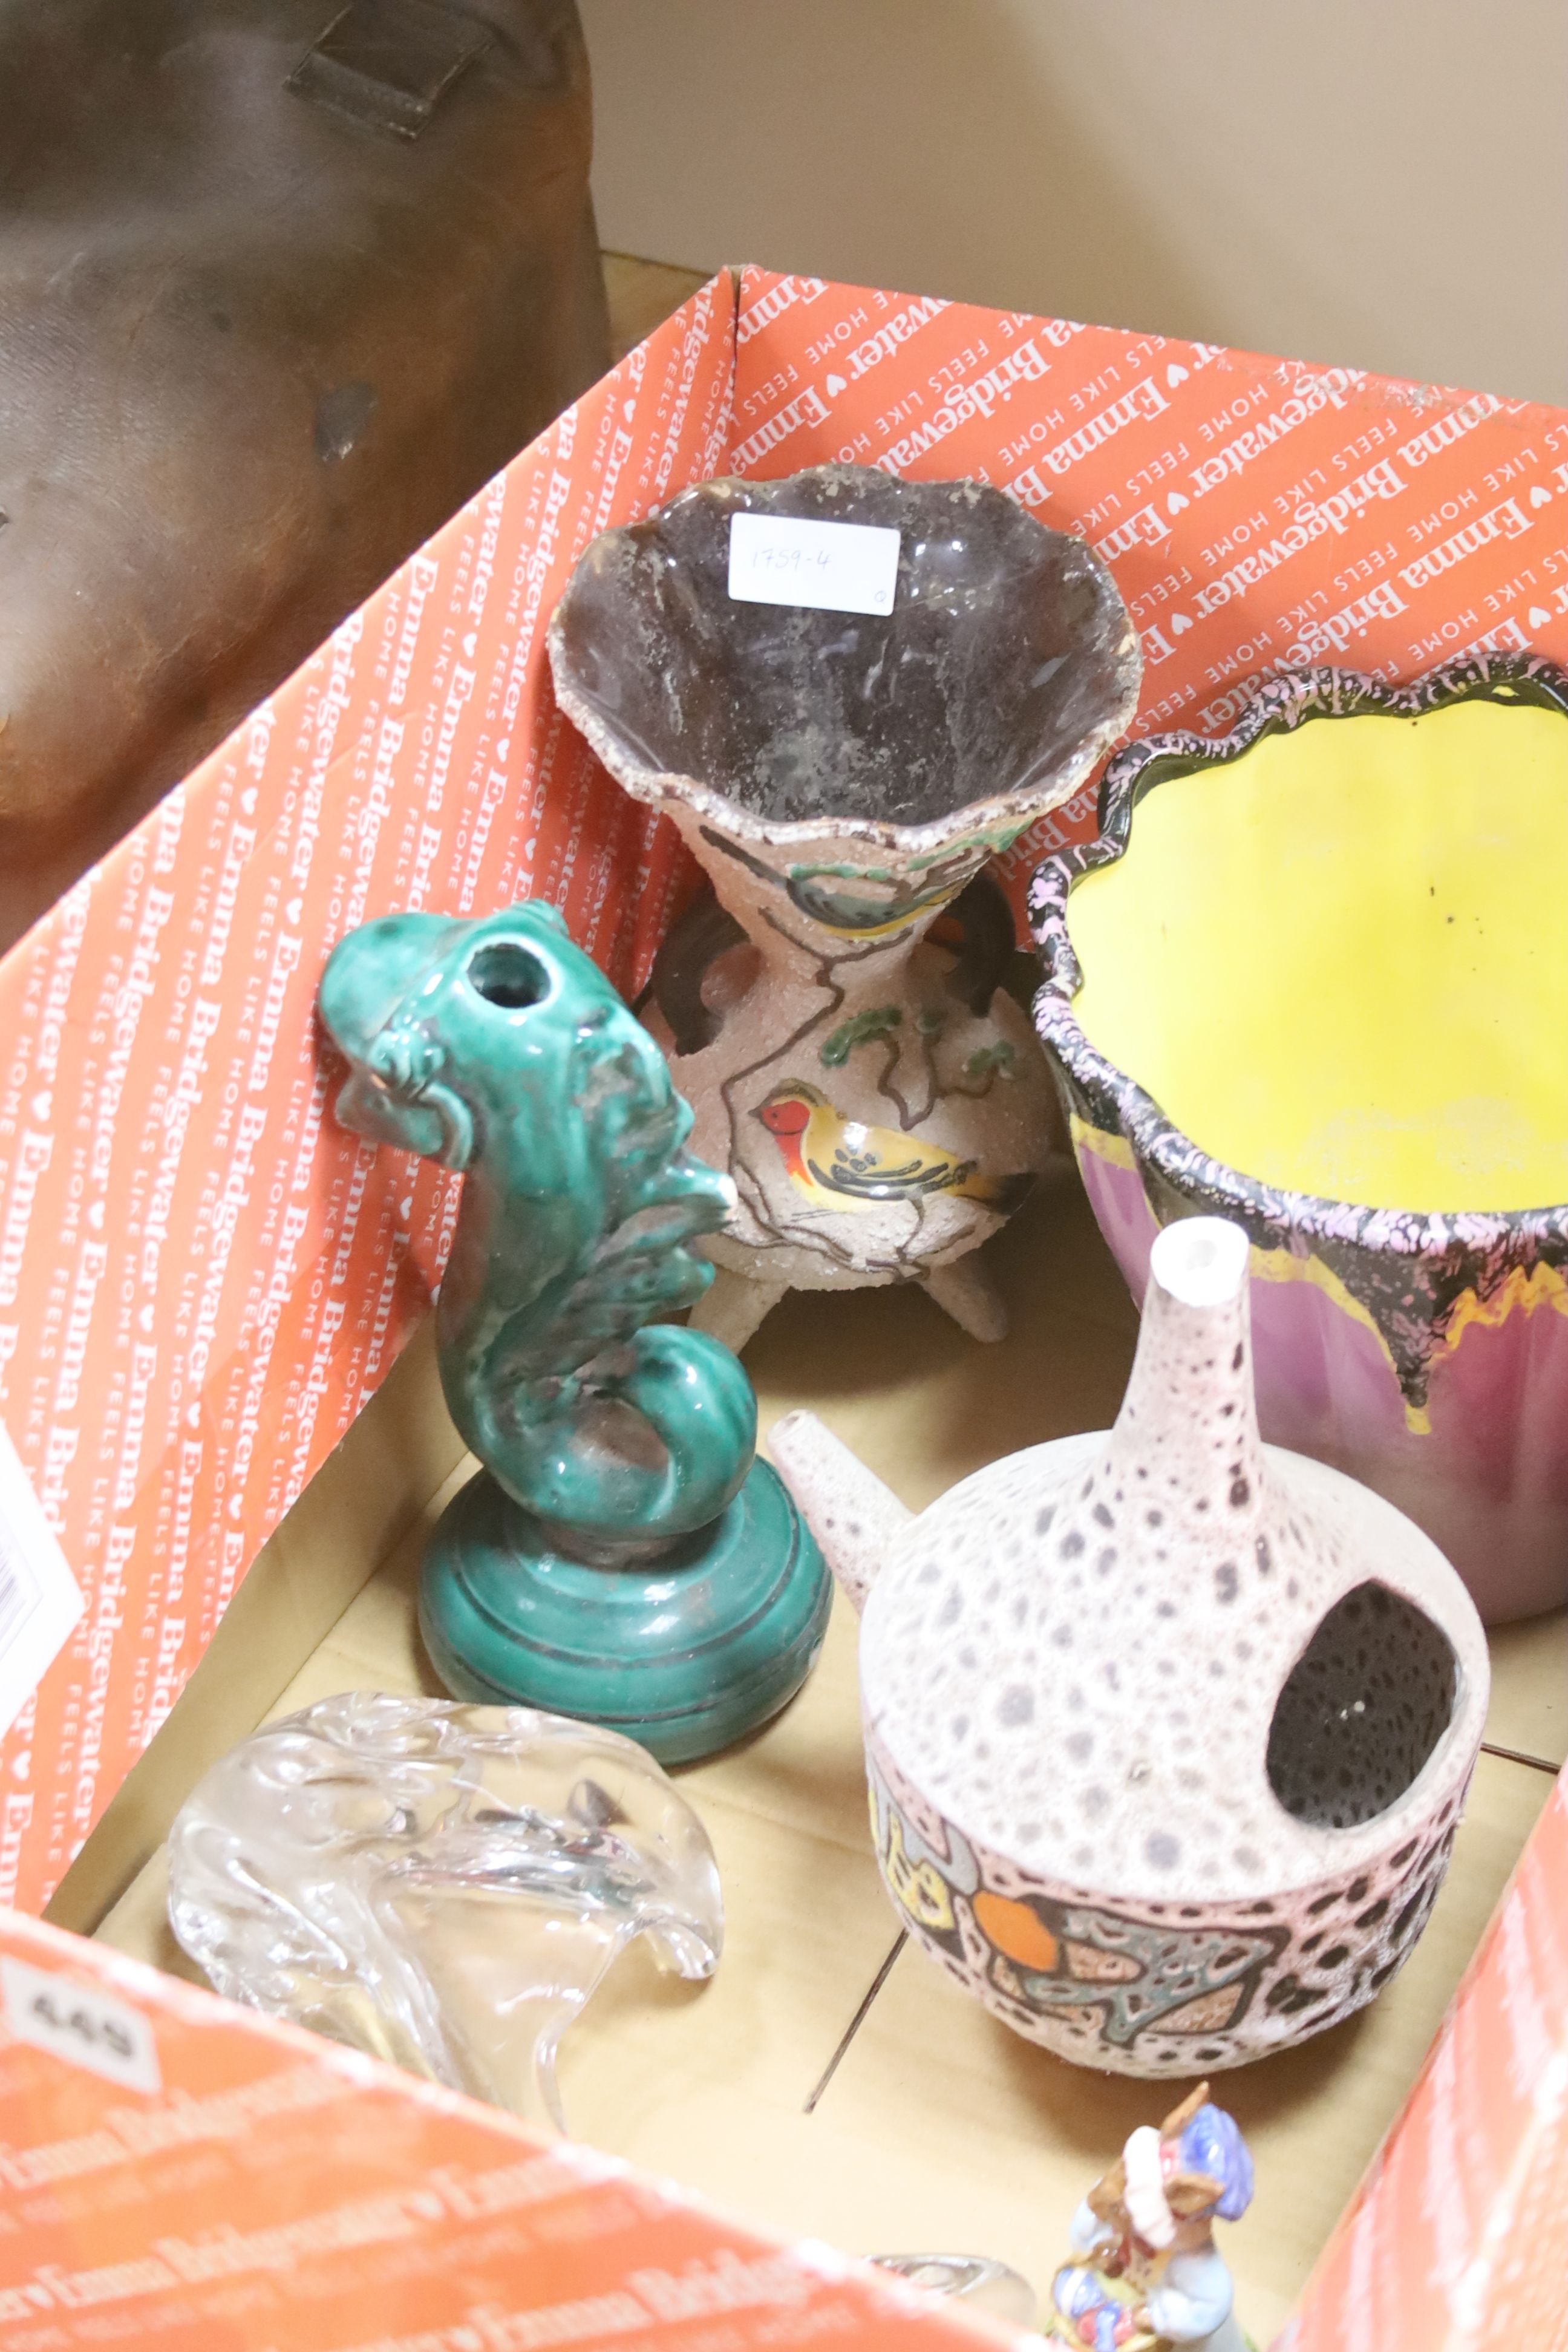 Mixed ceramics and glass including Bunnykins figure